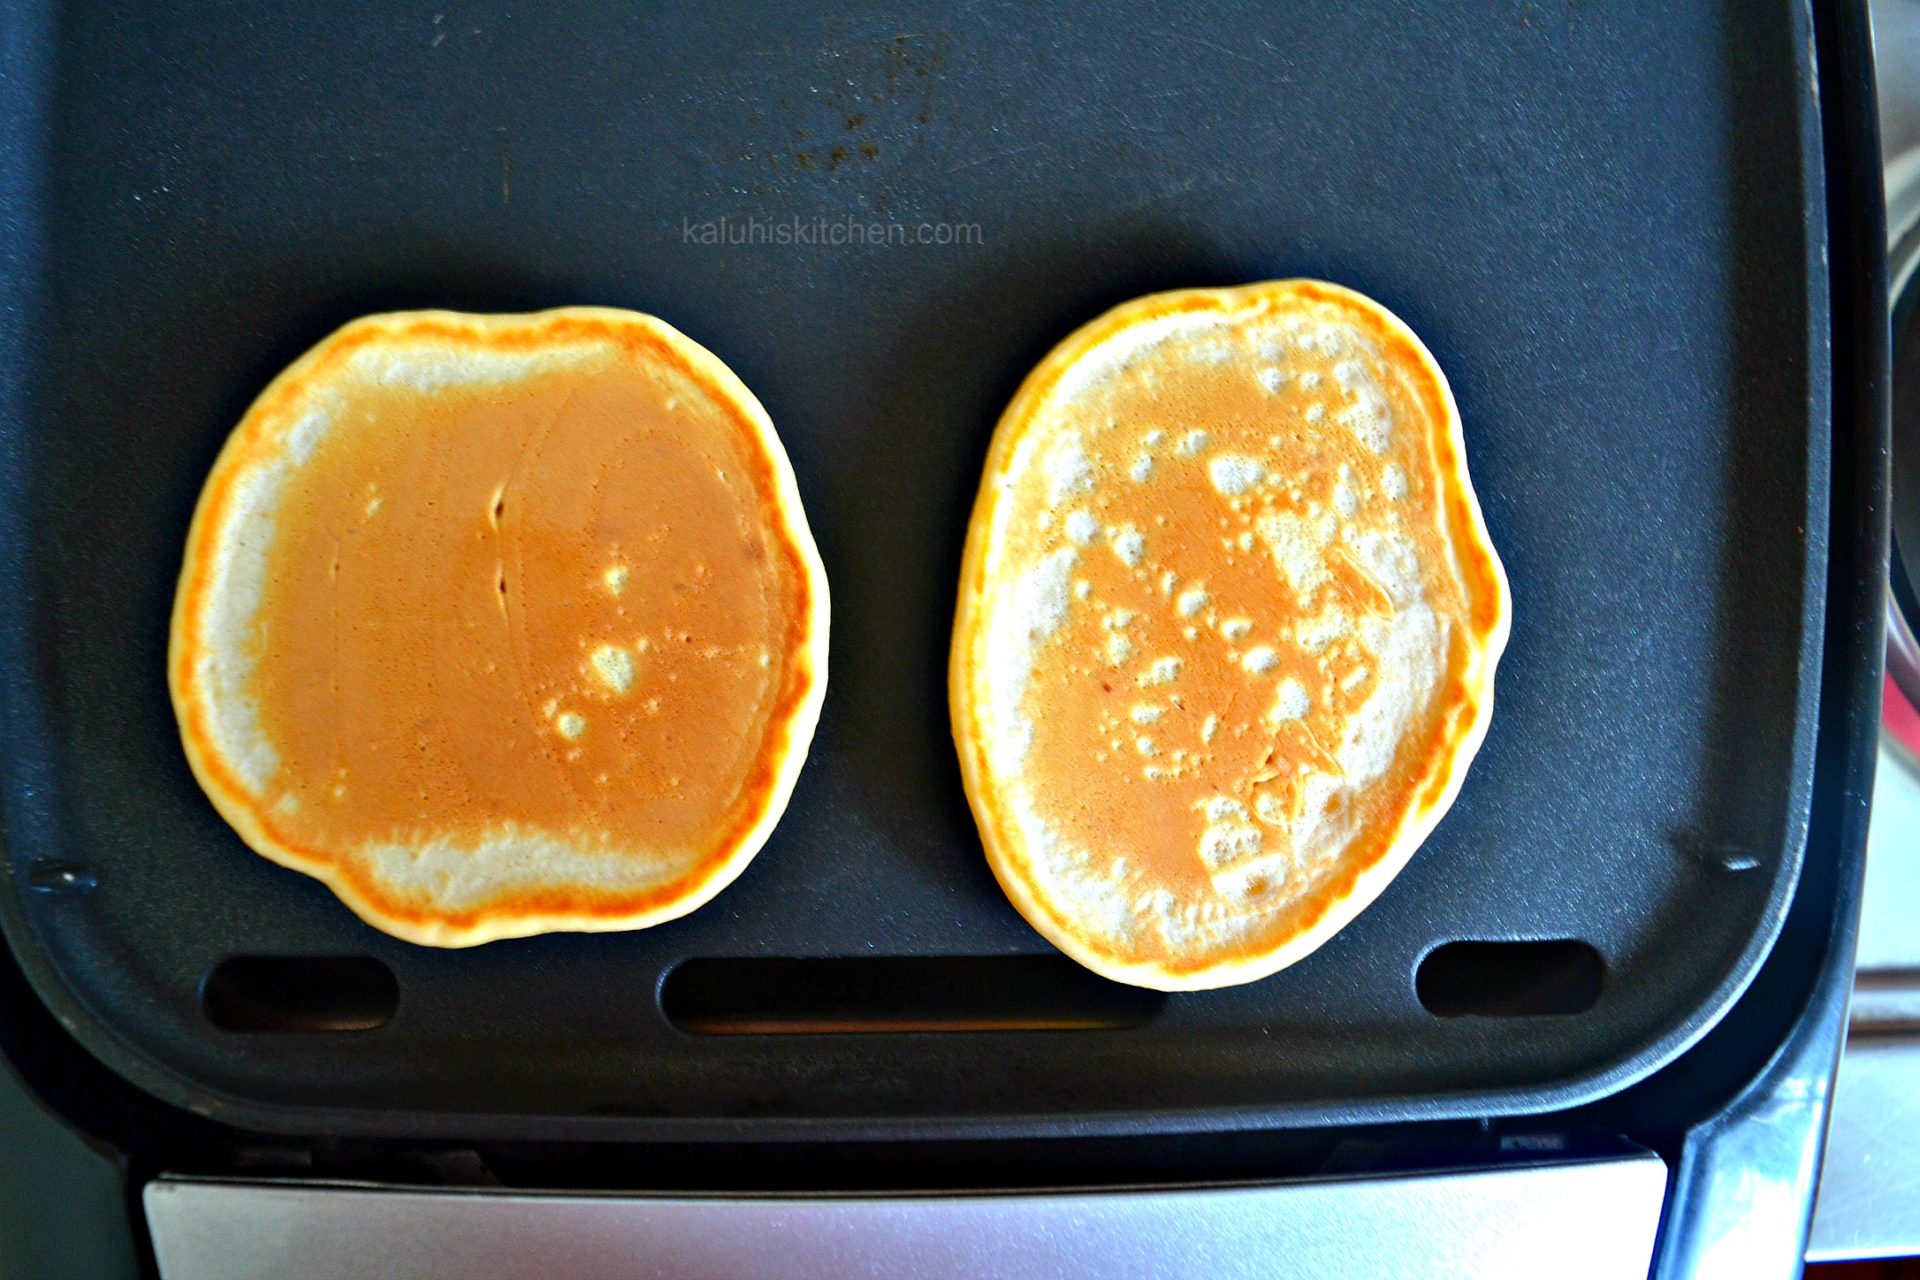 custard pancakes are ready when they have just turned borwn_custard pancakes recipe_kaluhiskitchen.com